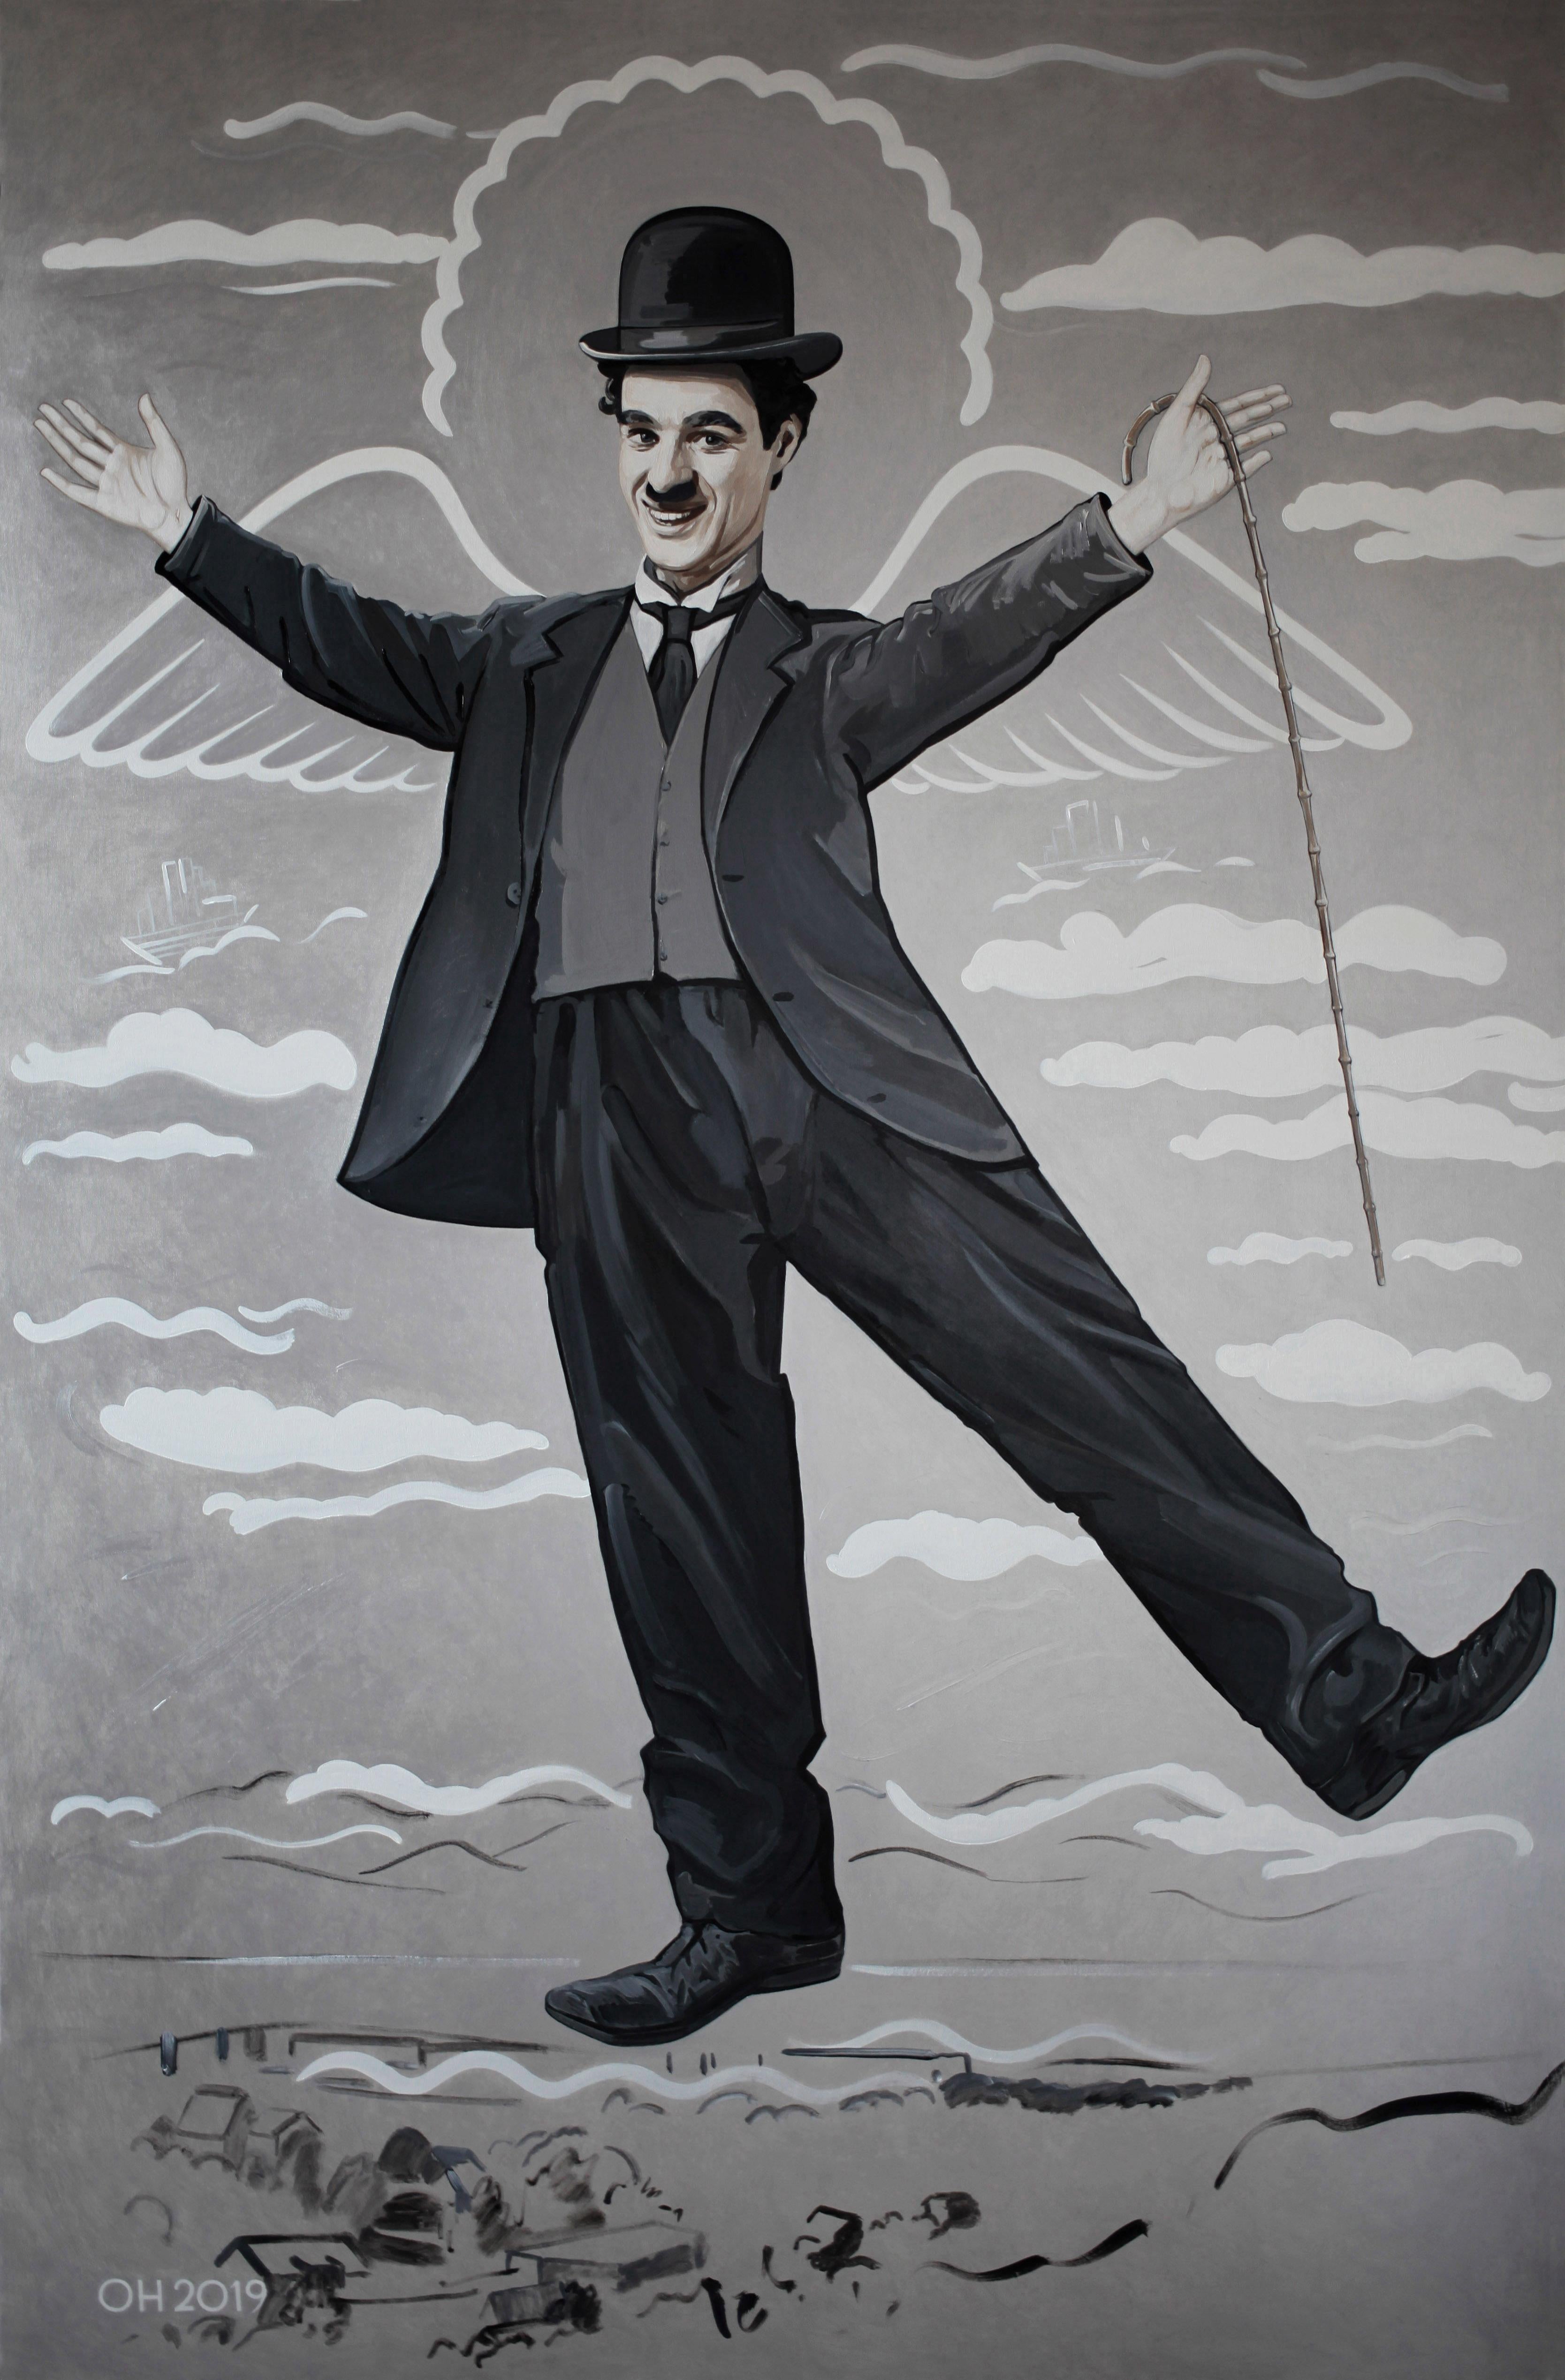 Ukrainian Contemporary Art by Orest Hrytsak - Charlie Chaplin